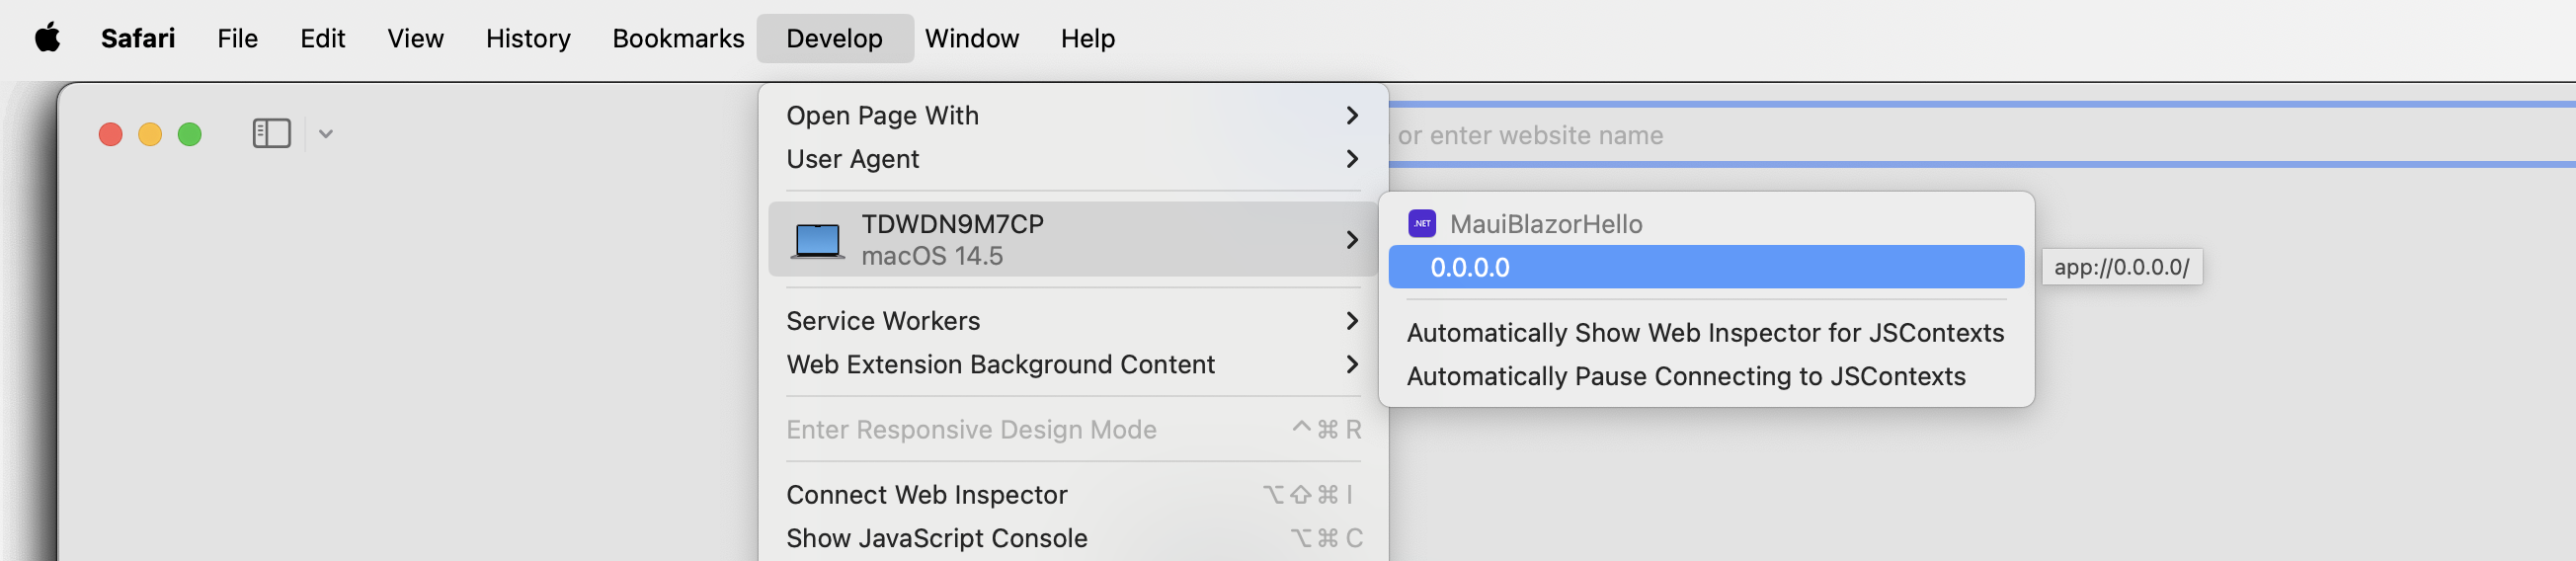 Safari - Develop - macOS - 0.0.0.0